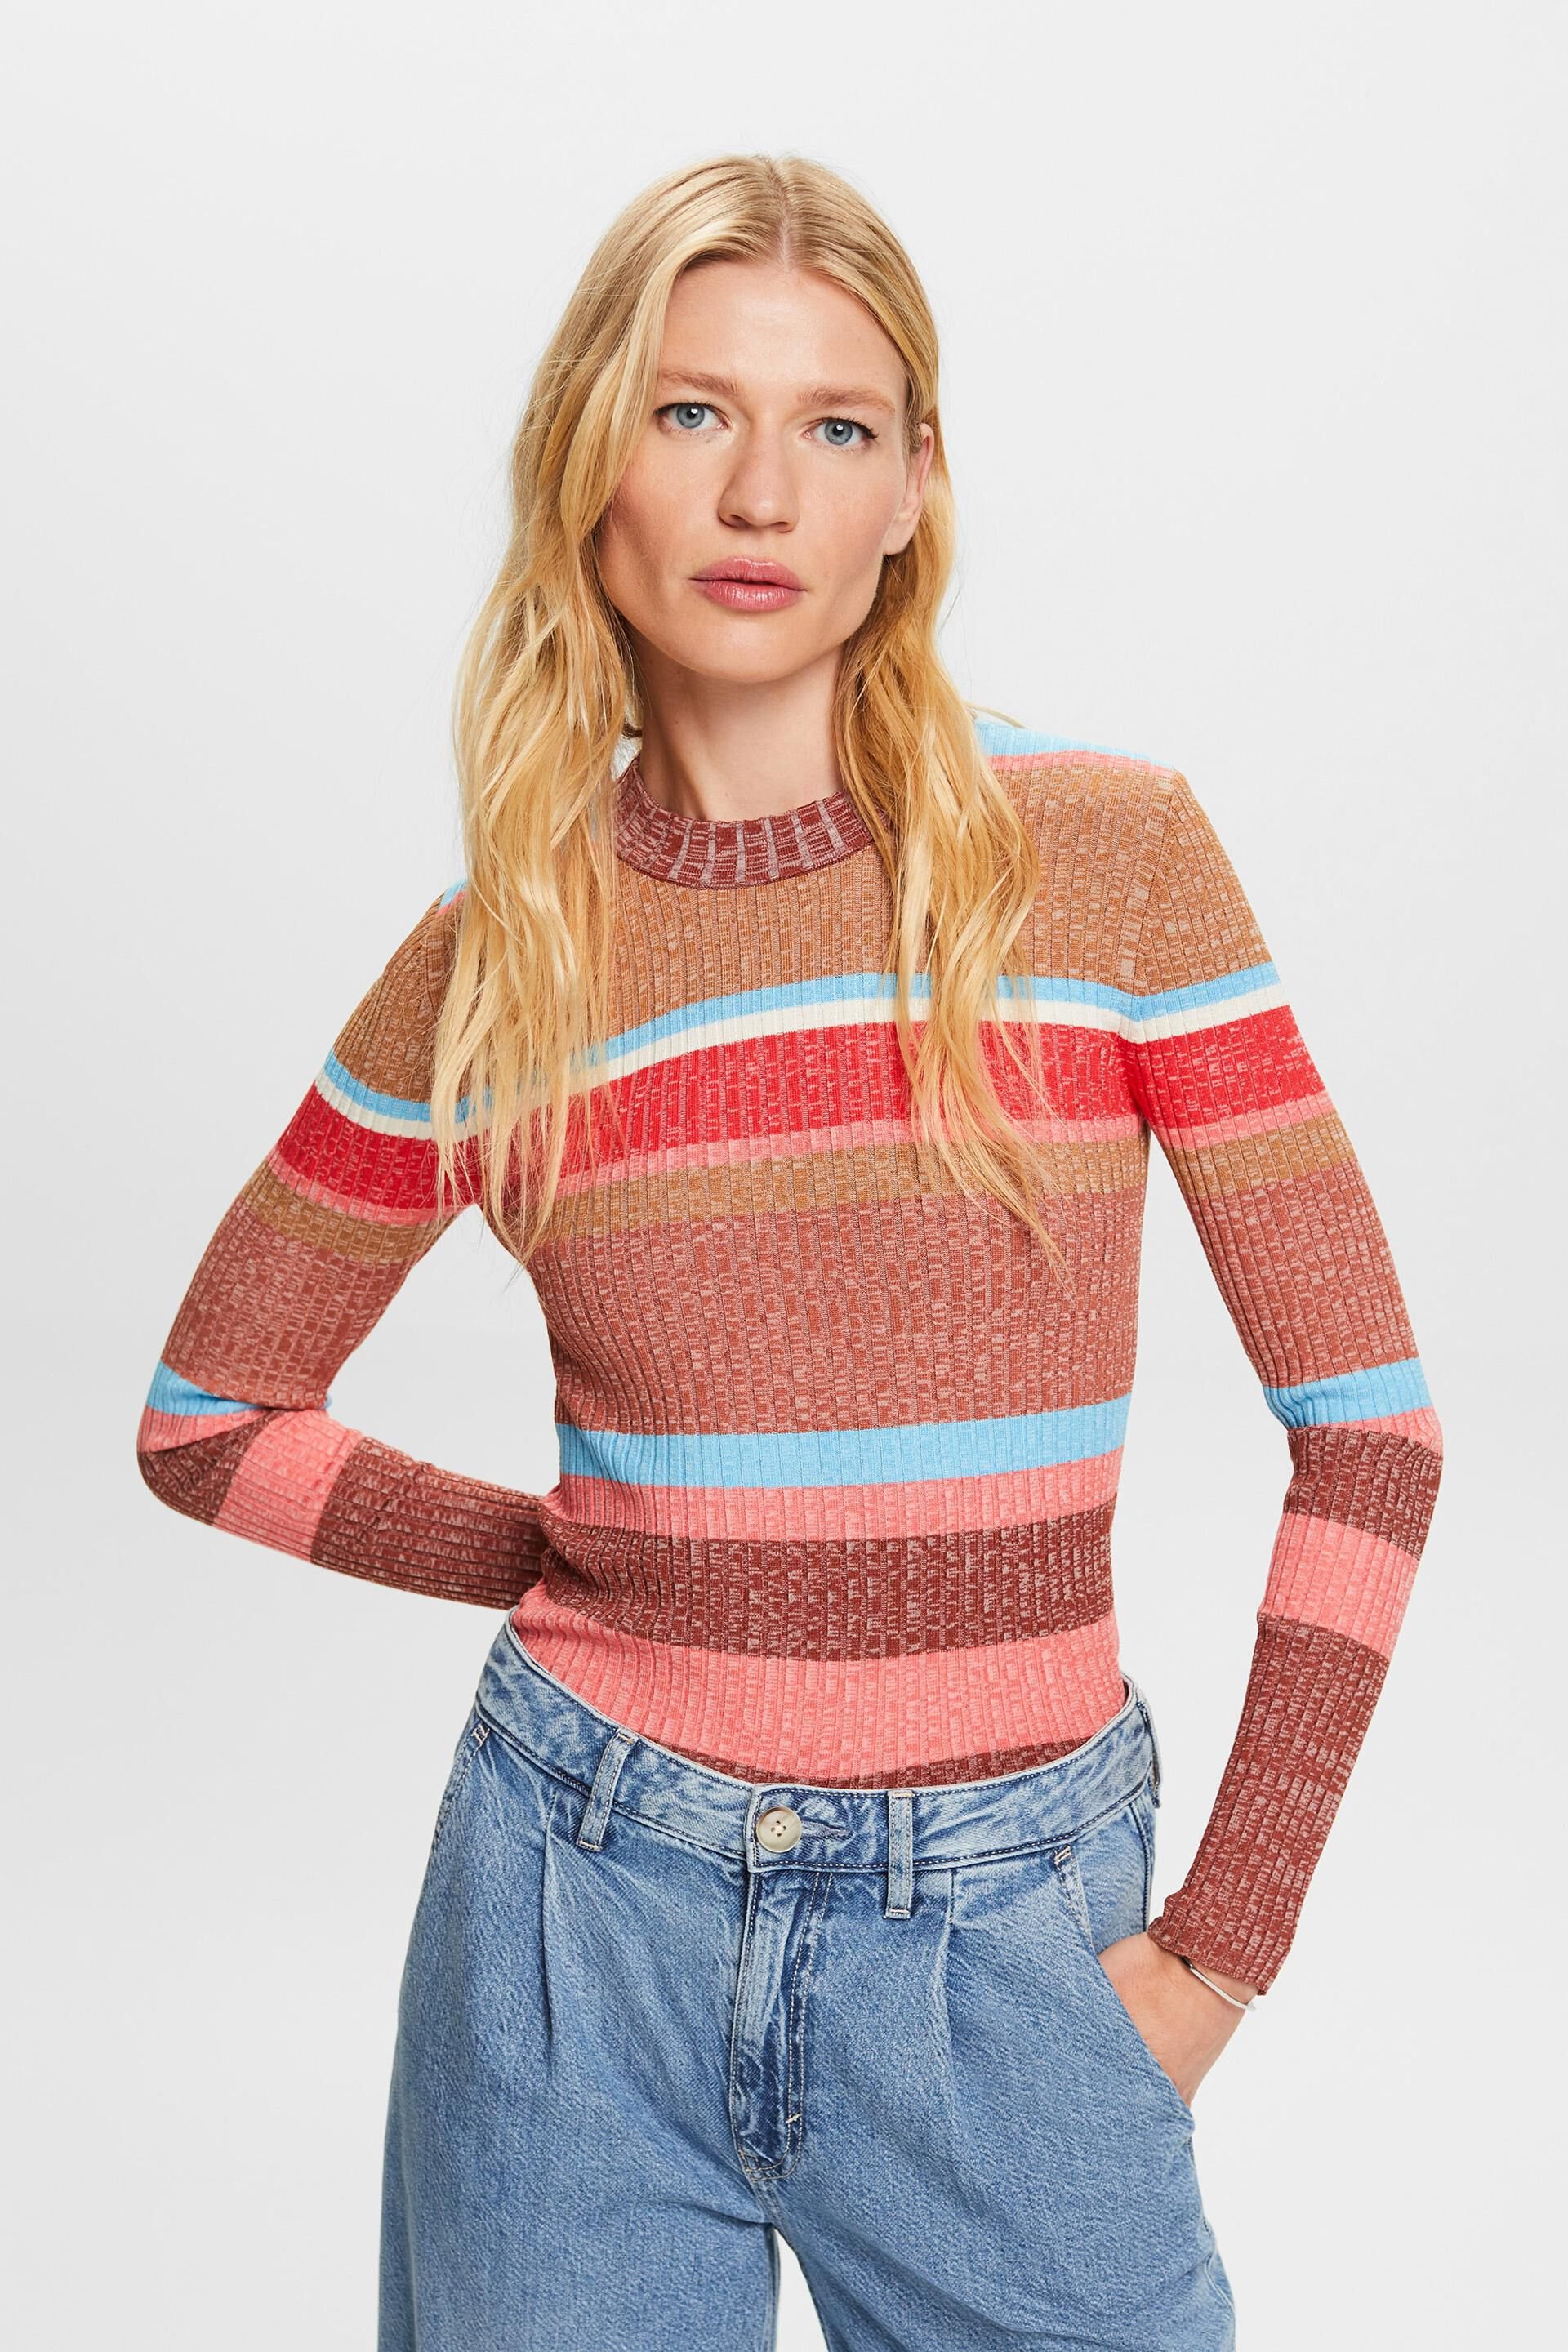 Esprit jumper, LENZING™ Striped knit ECOVERO™ rib